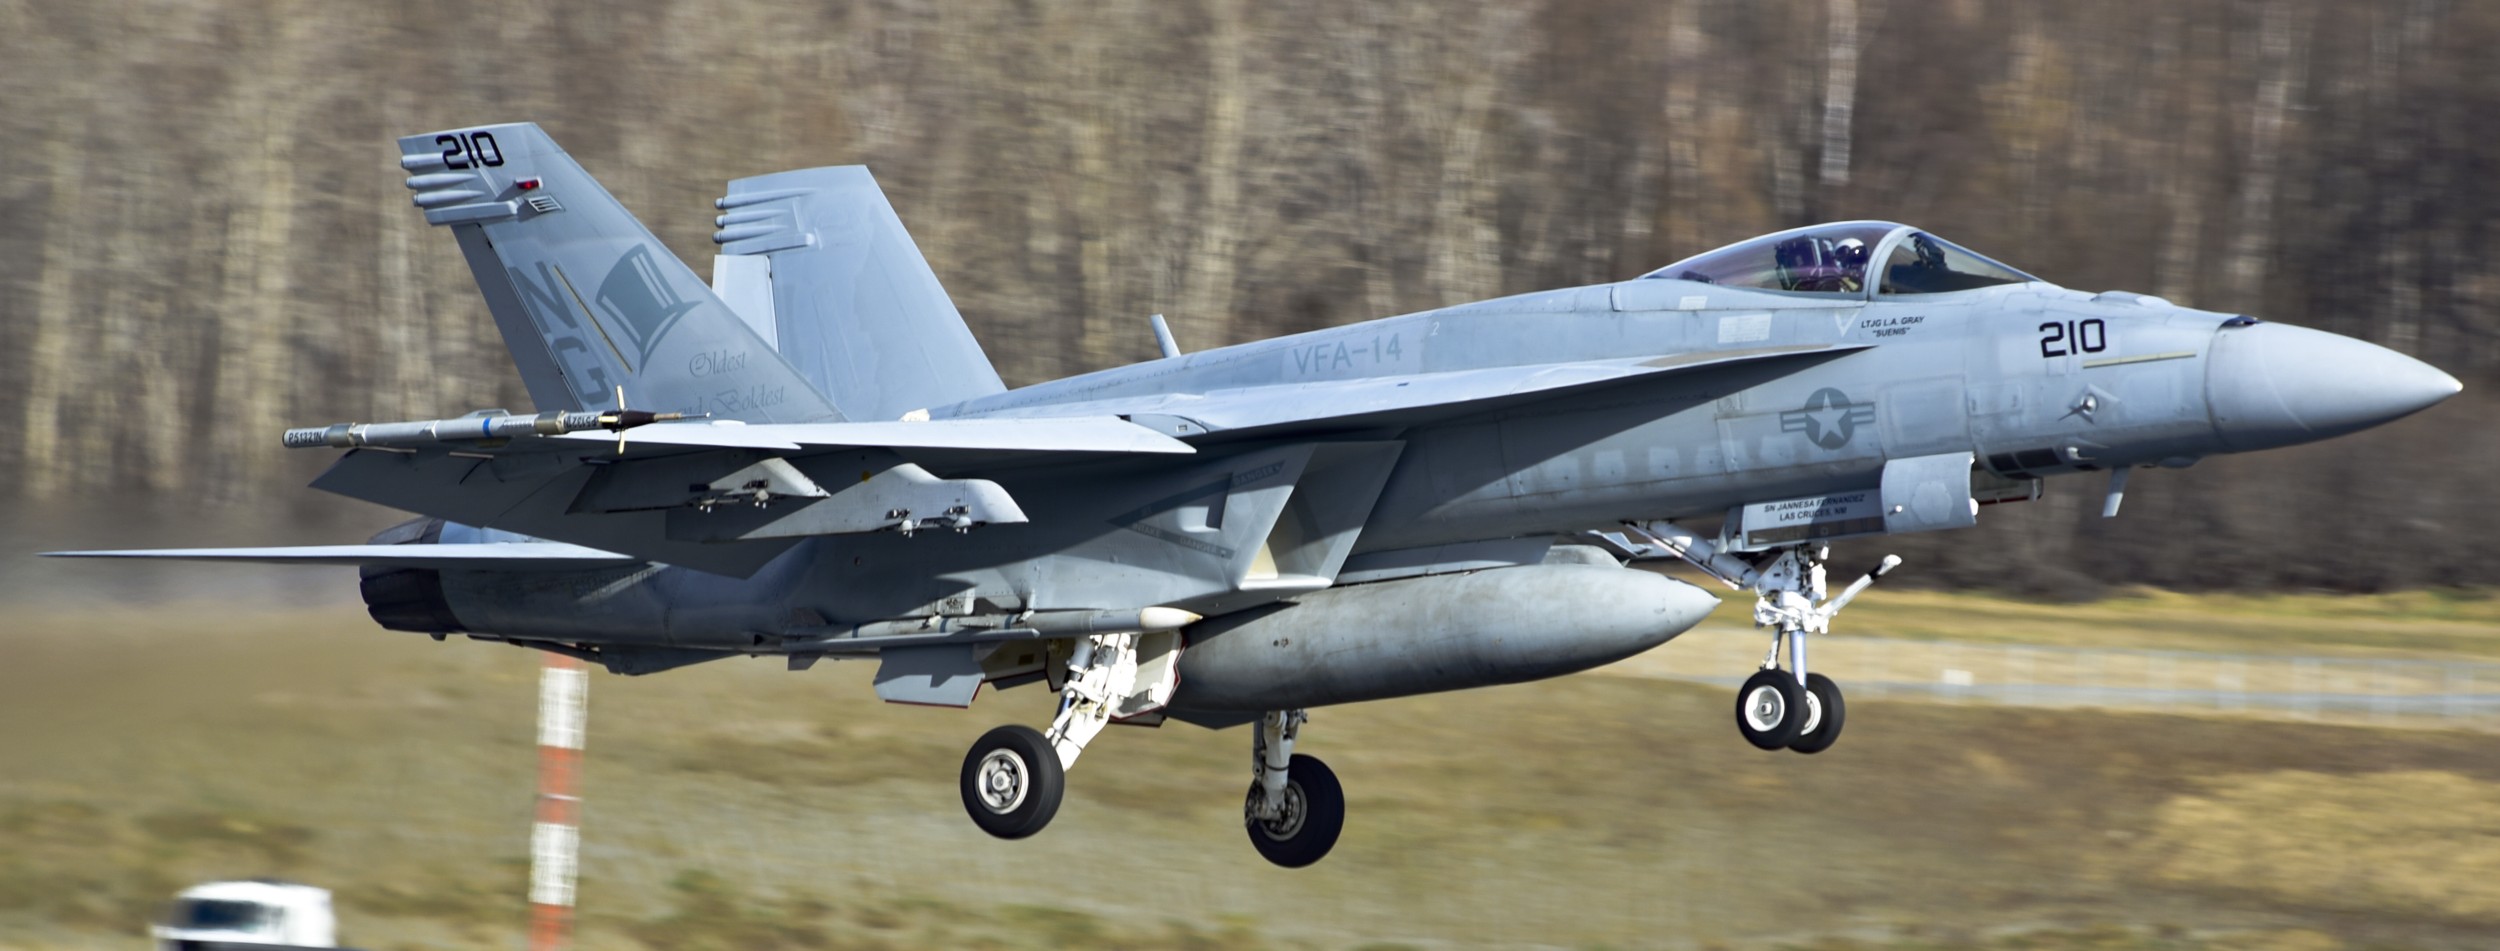 vfa-14 tophatters strike fighter squadron f/a-18e super hornet exercise northern edge elmendorf richardson alaska 25